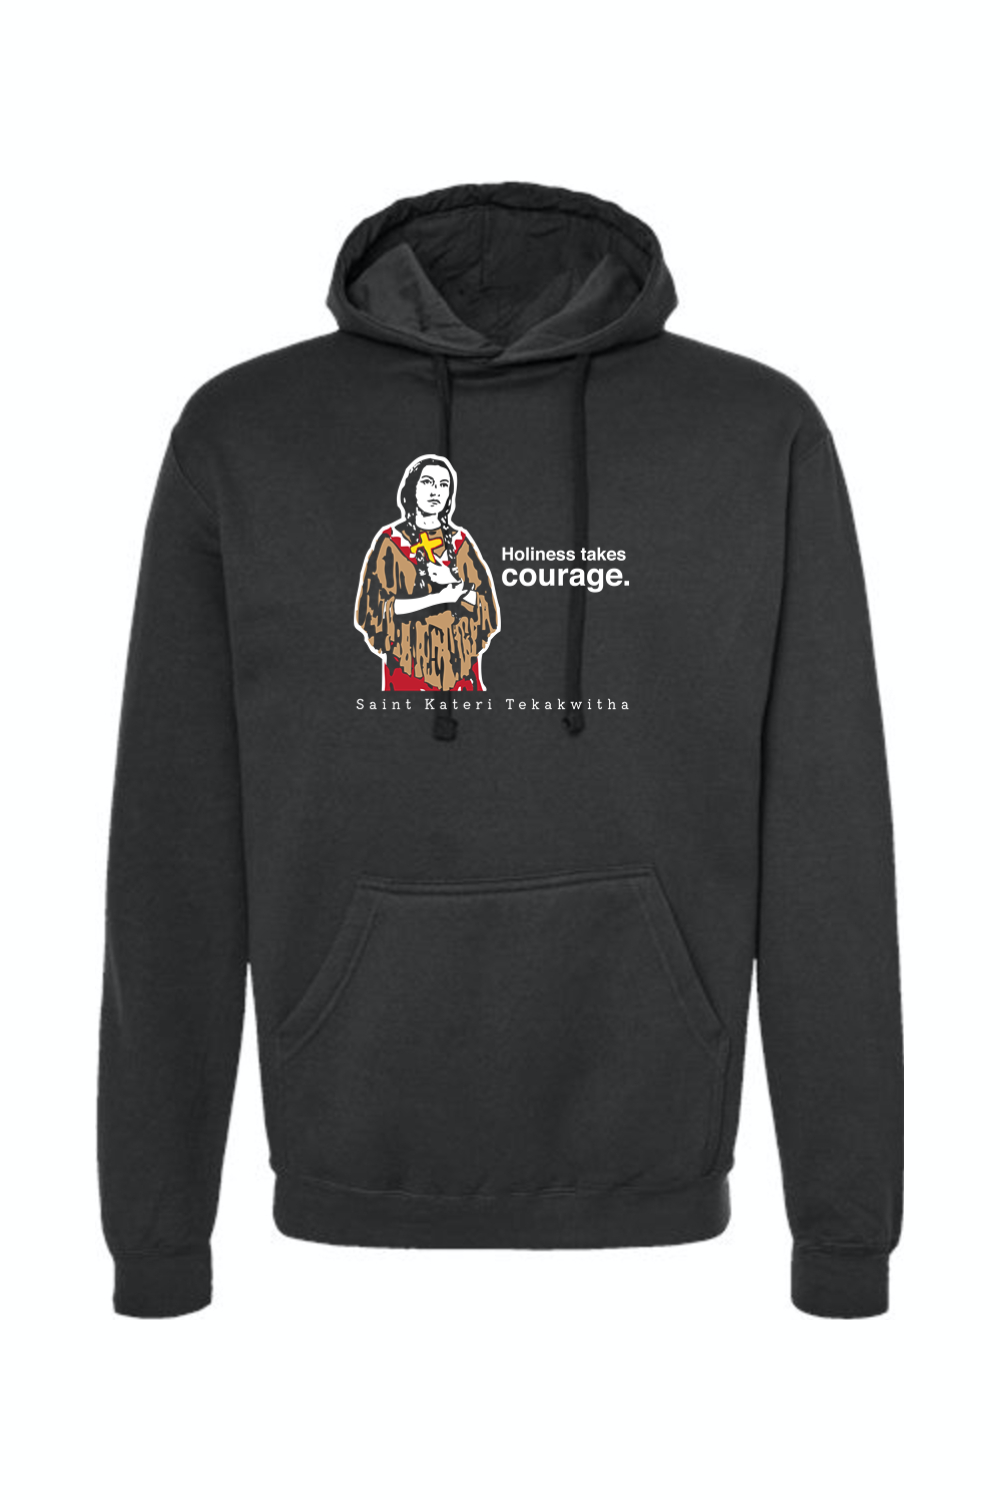 Holiness Takes Courage - St. Kateri Tekakwitha Hoodie Sweatshirt